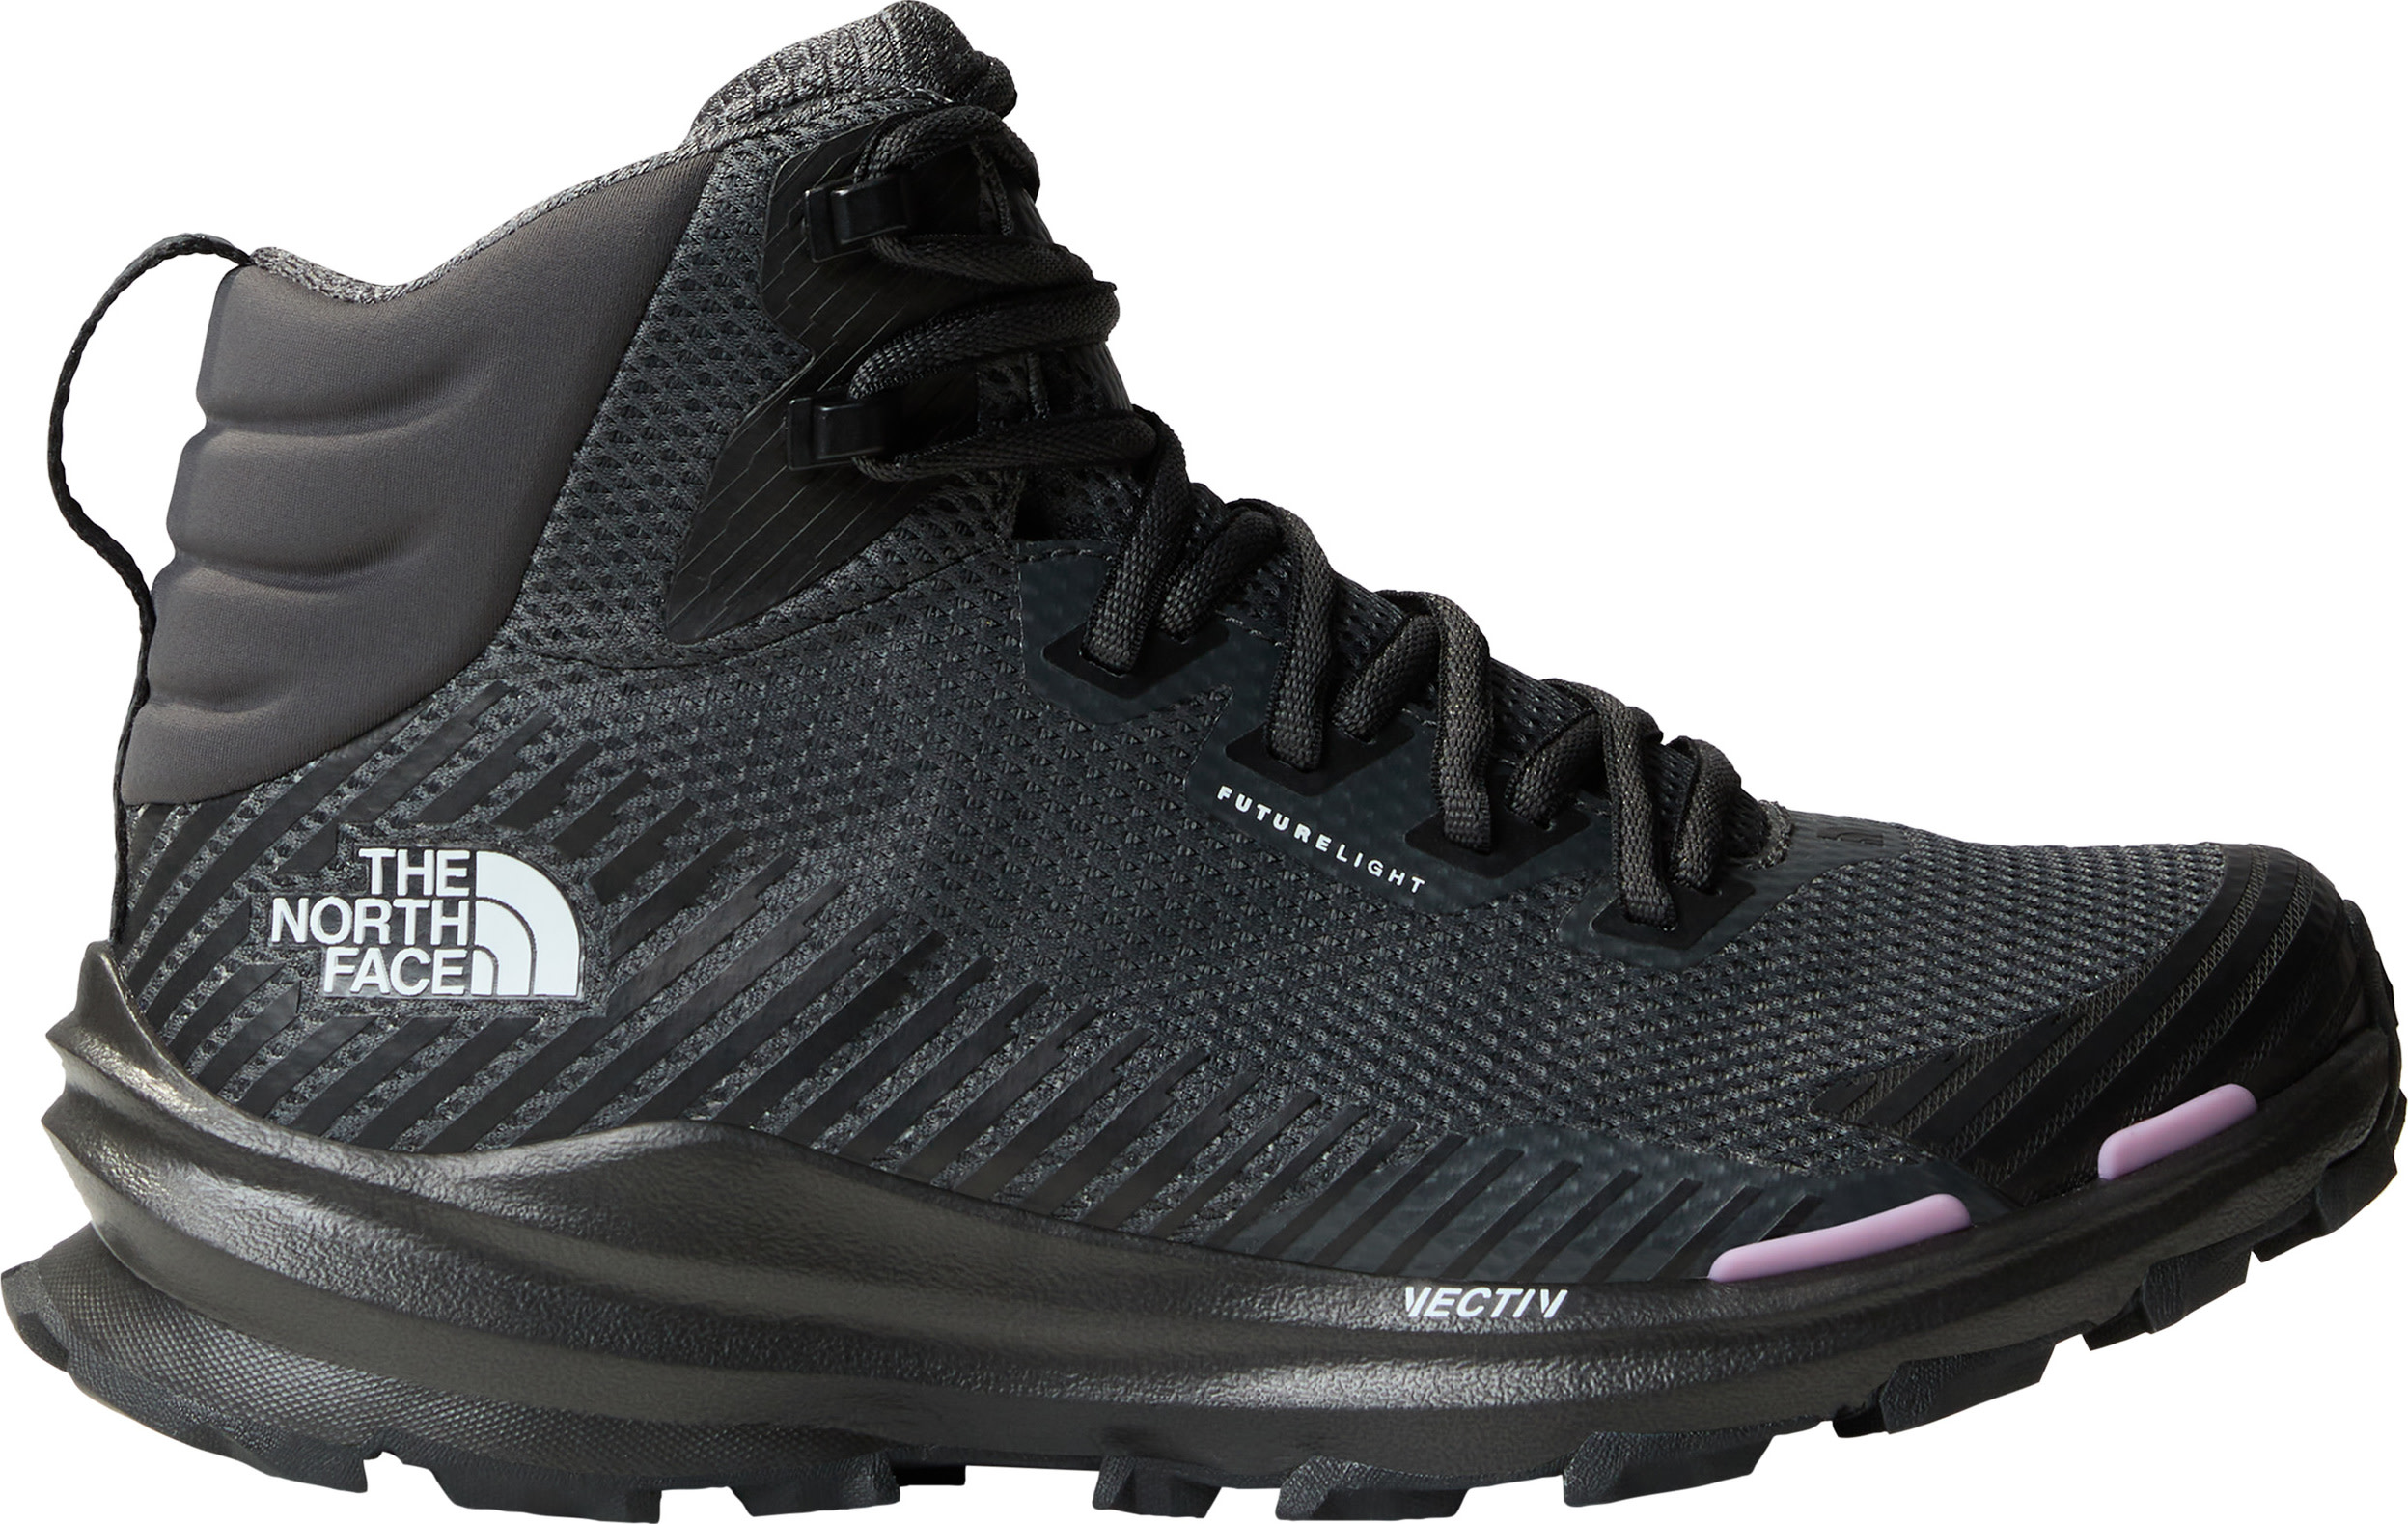 The North Face Women’s Vectiv Fastpack Futurelight Hiking Boots TNF Black/Asphalt Grey